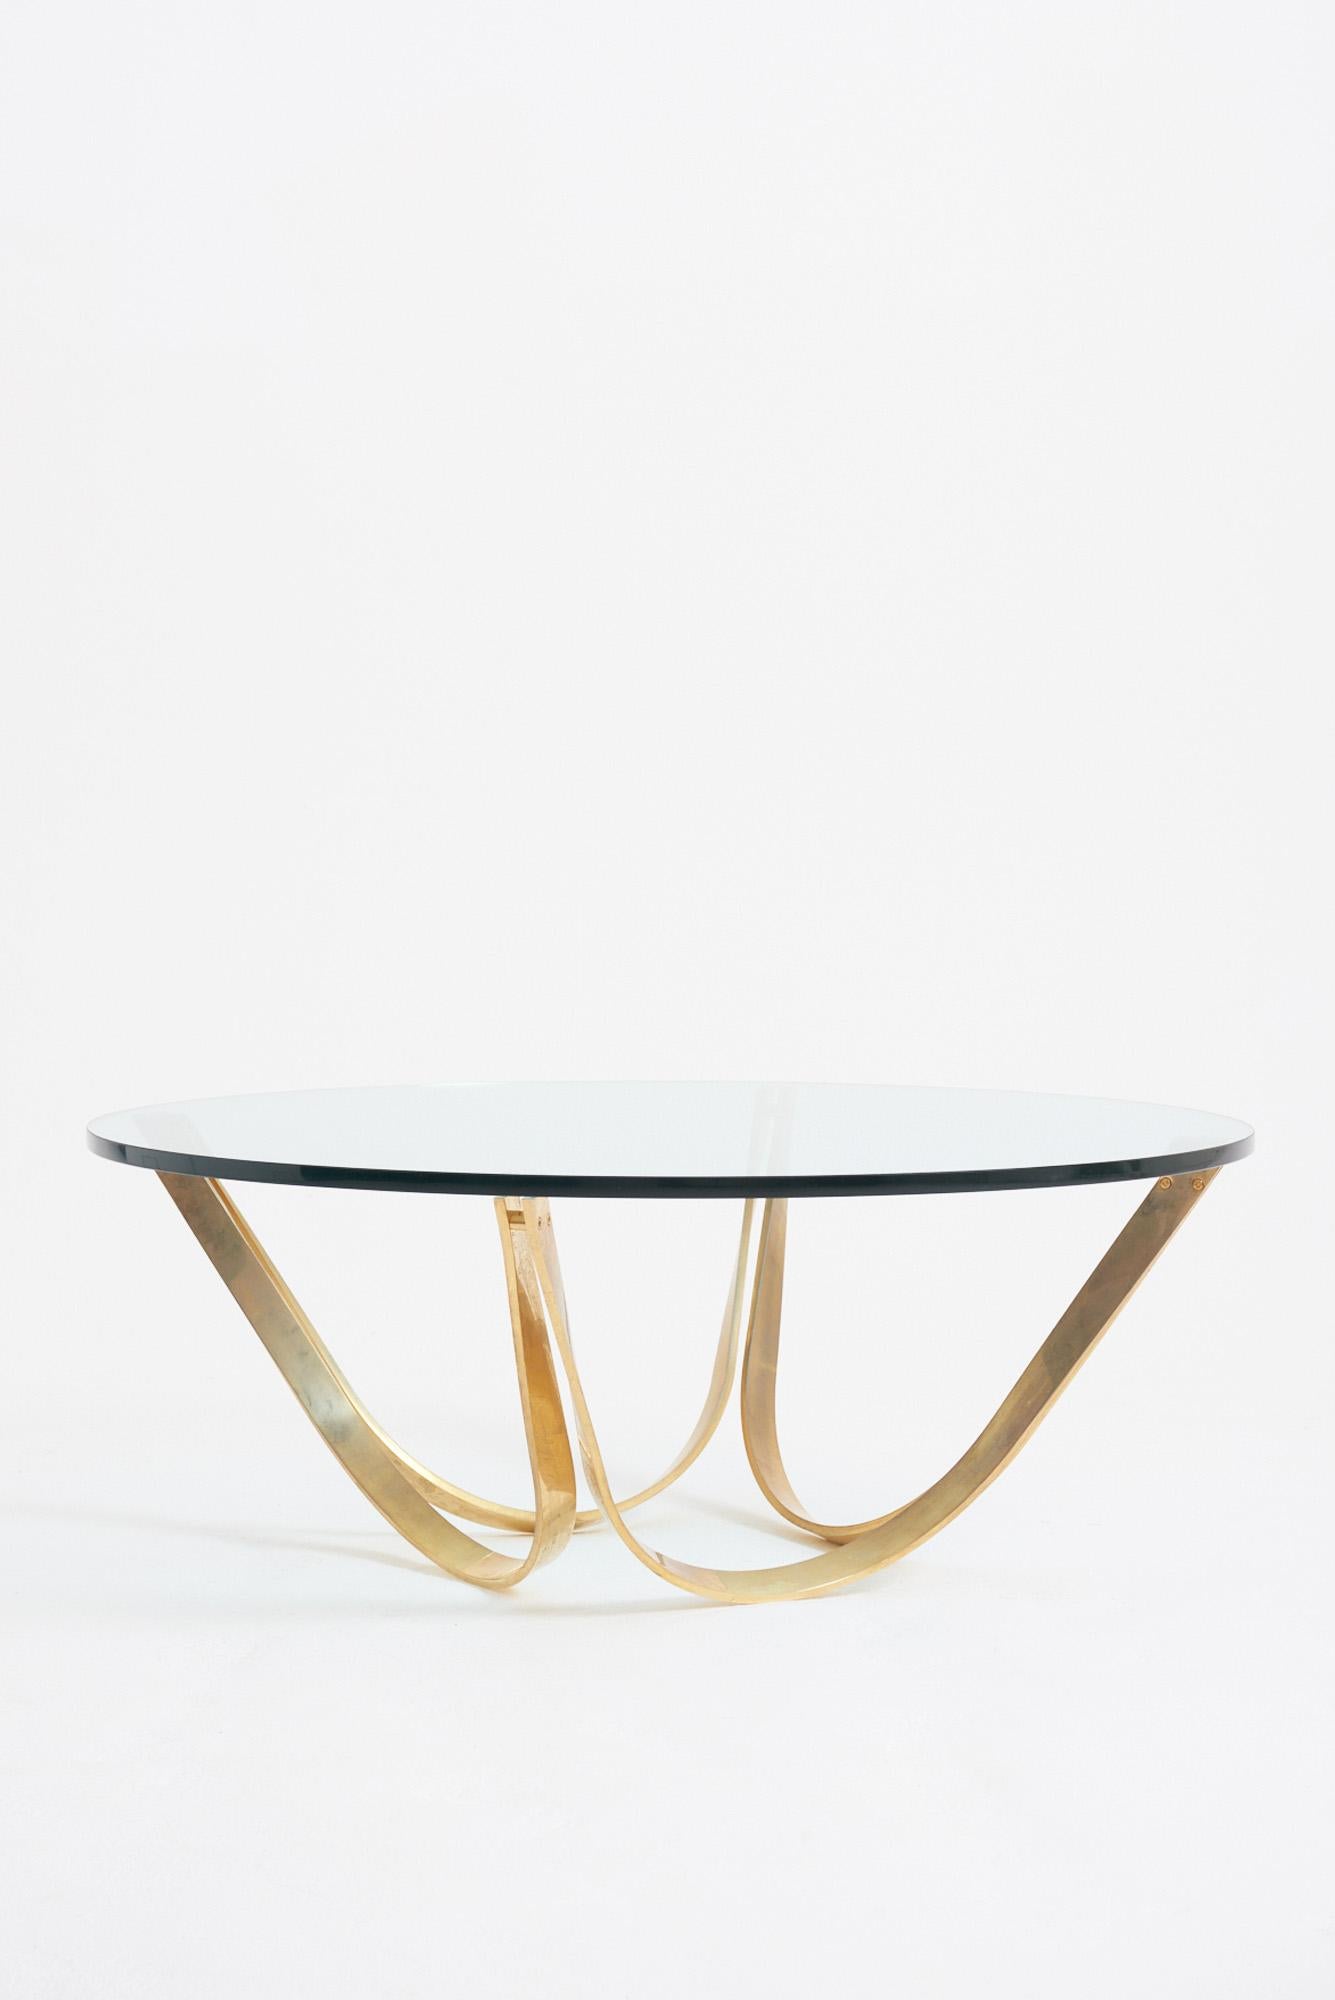 20th Century Circular Glass Top Coffee Table